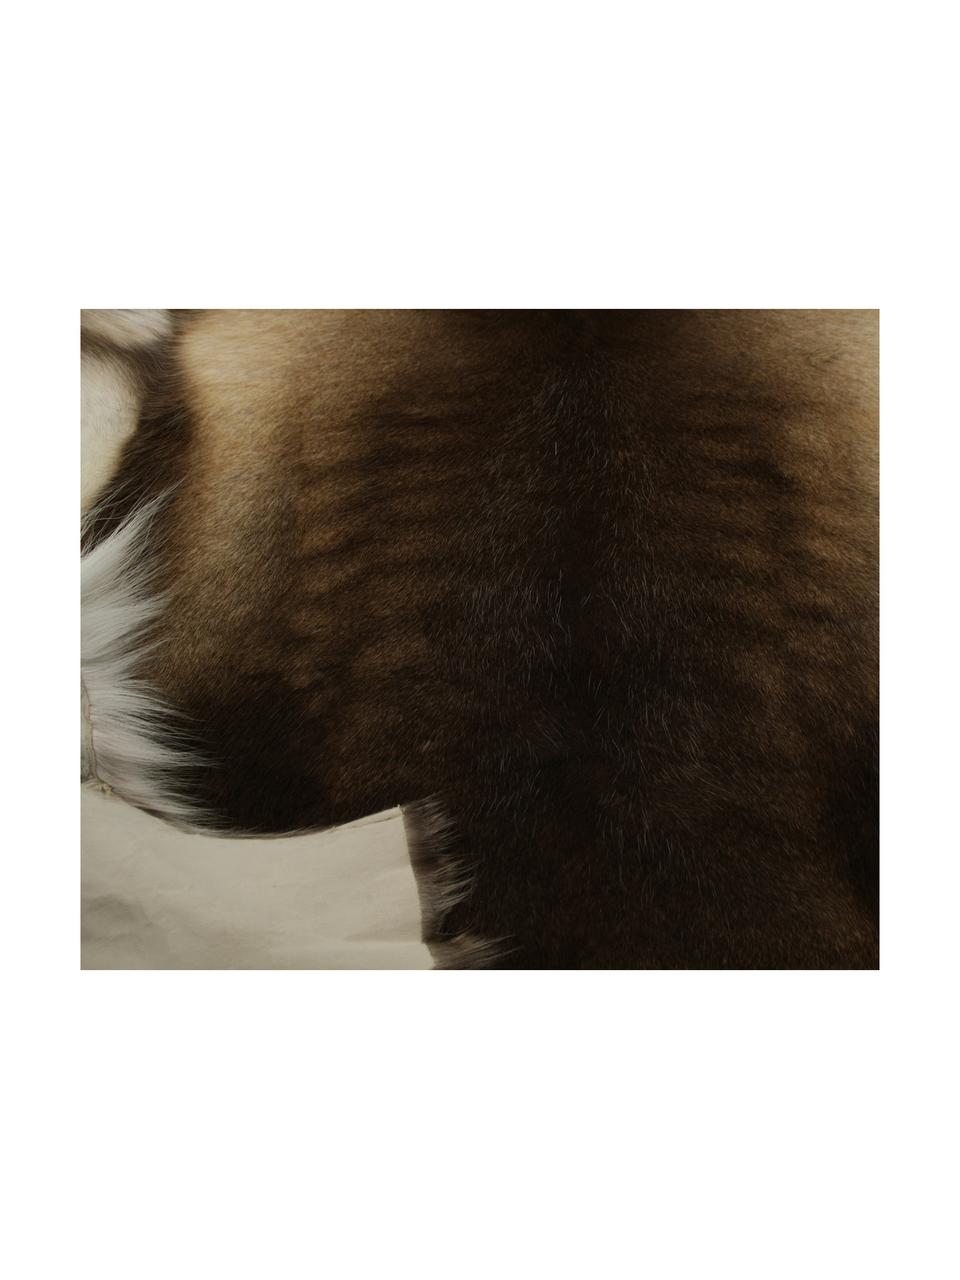 Tappeto in pelle di renna Adrastea, Pelle di renna, conciata, Toni marroni, bianco, Pelle di renna unica 067, 75 x 115 cm